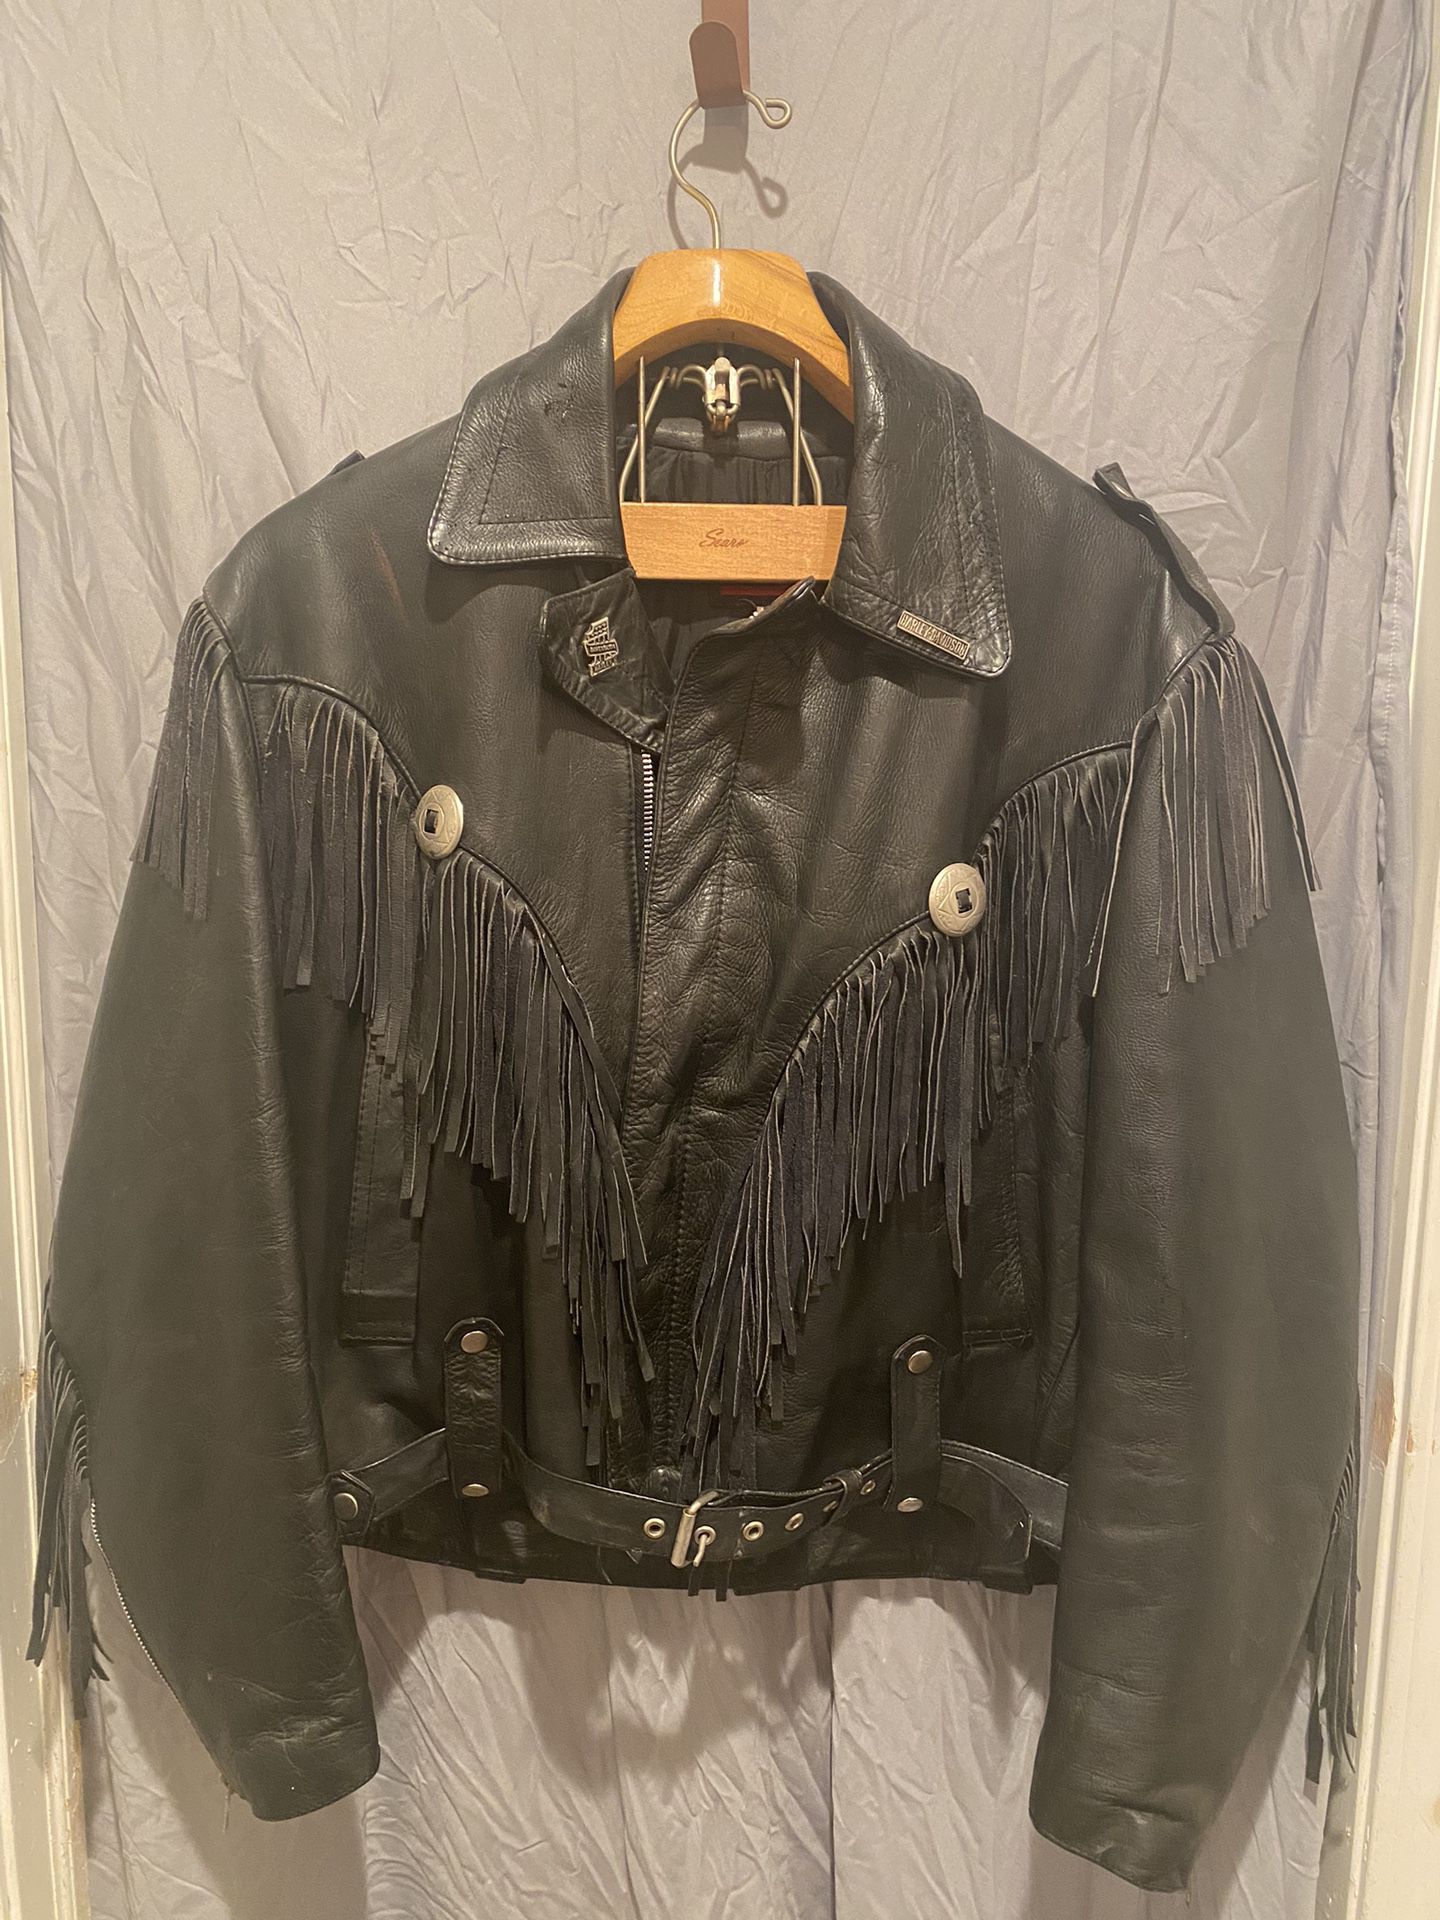 ICS Heavy Leather biker Jacket with fringe and silver embellishments